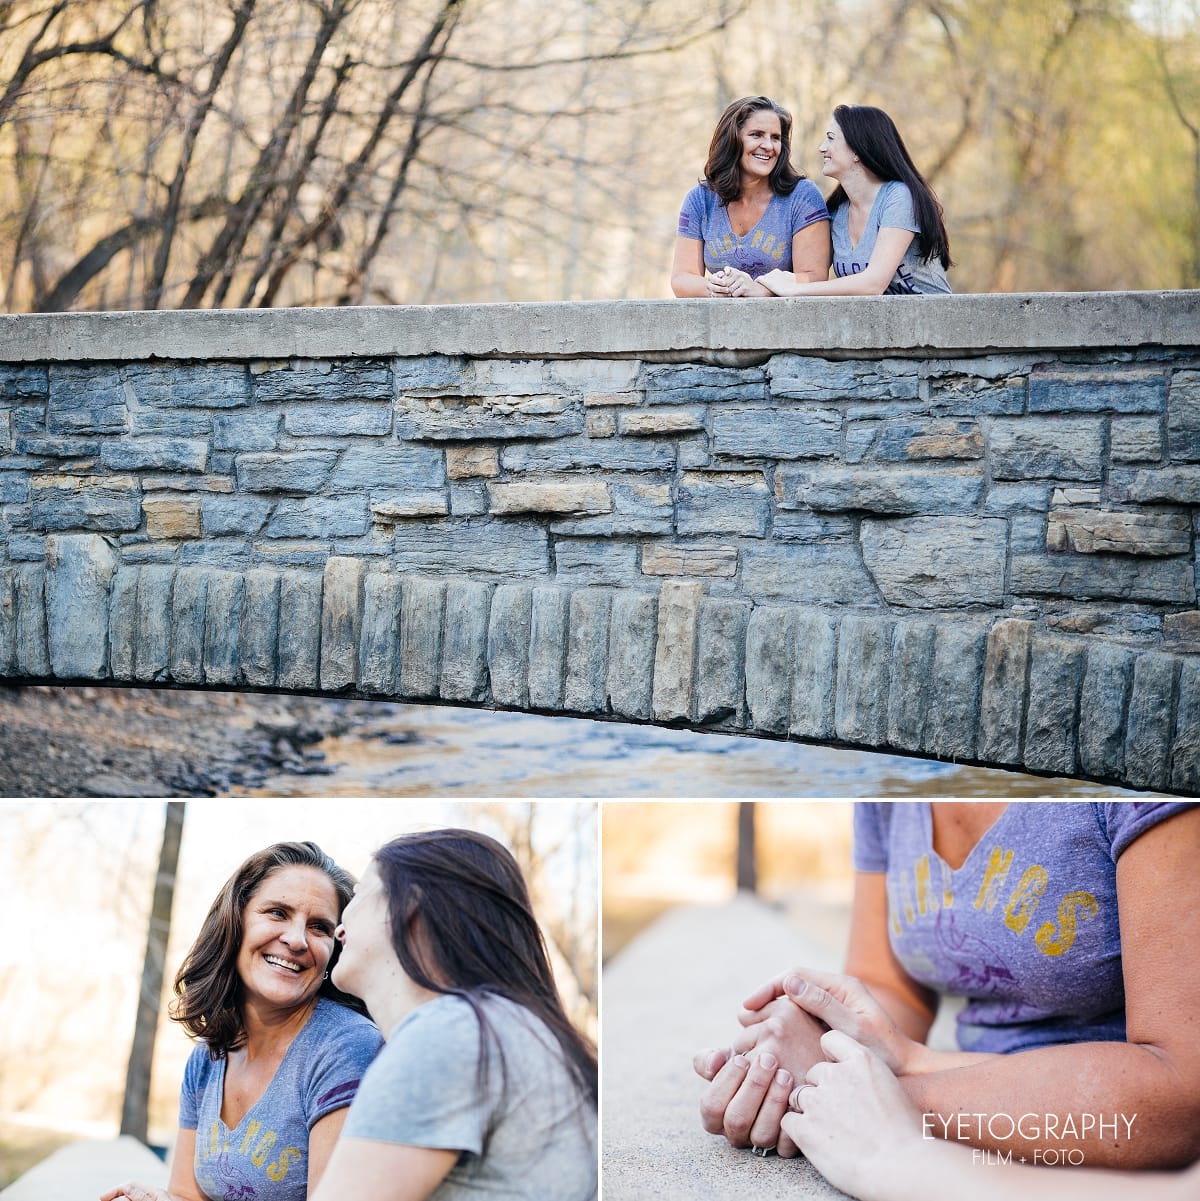 Gina and Beth 1 - Minnehaha Falls Engagement Photography